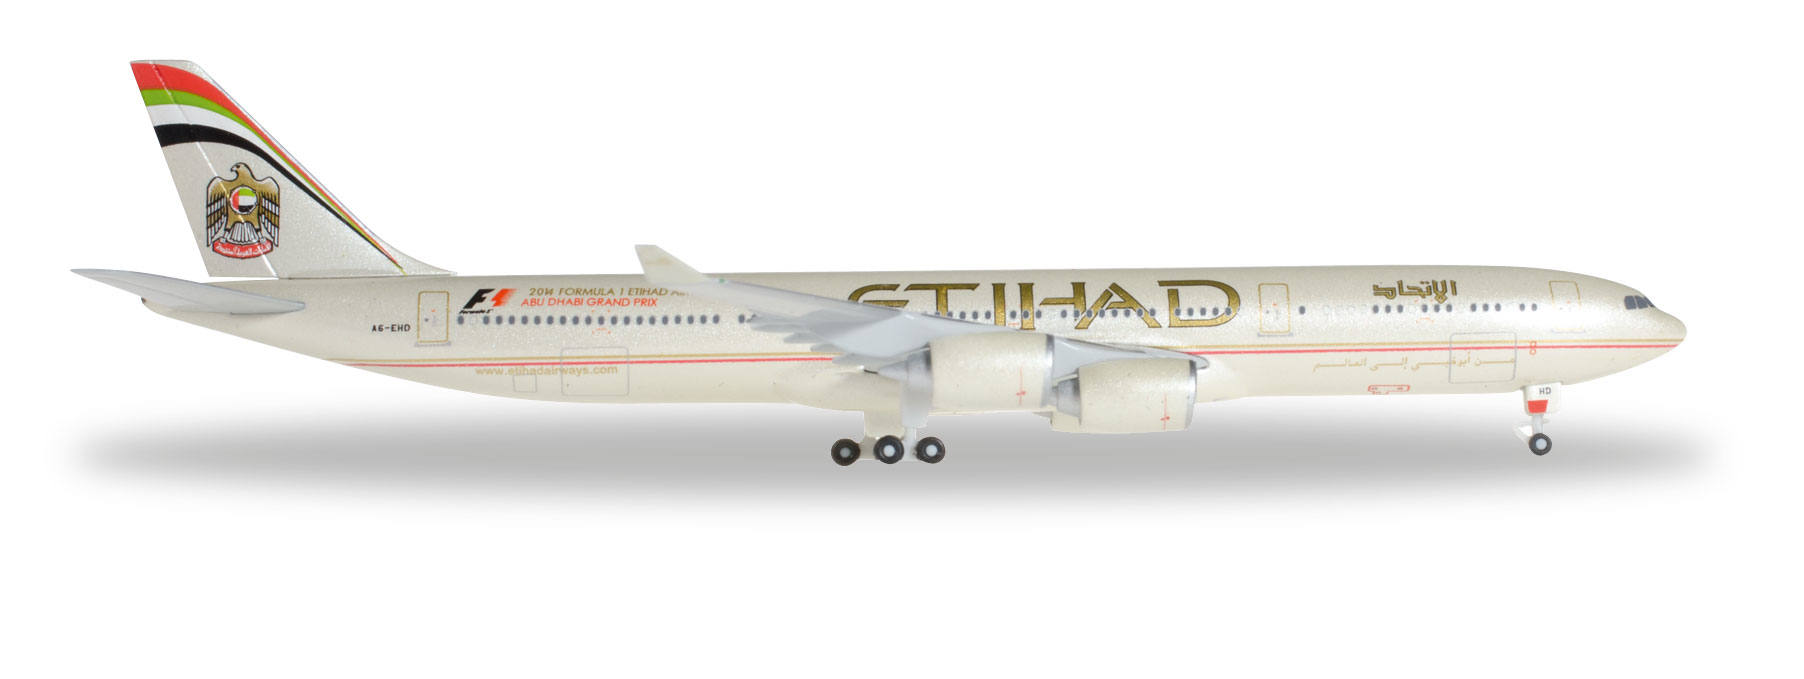 A340-500 Etihad Airways